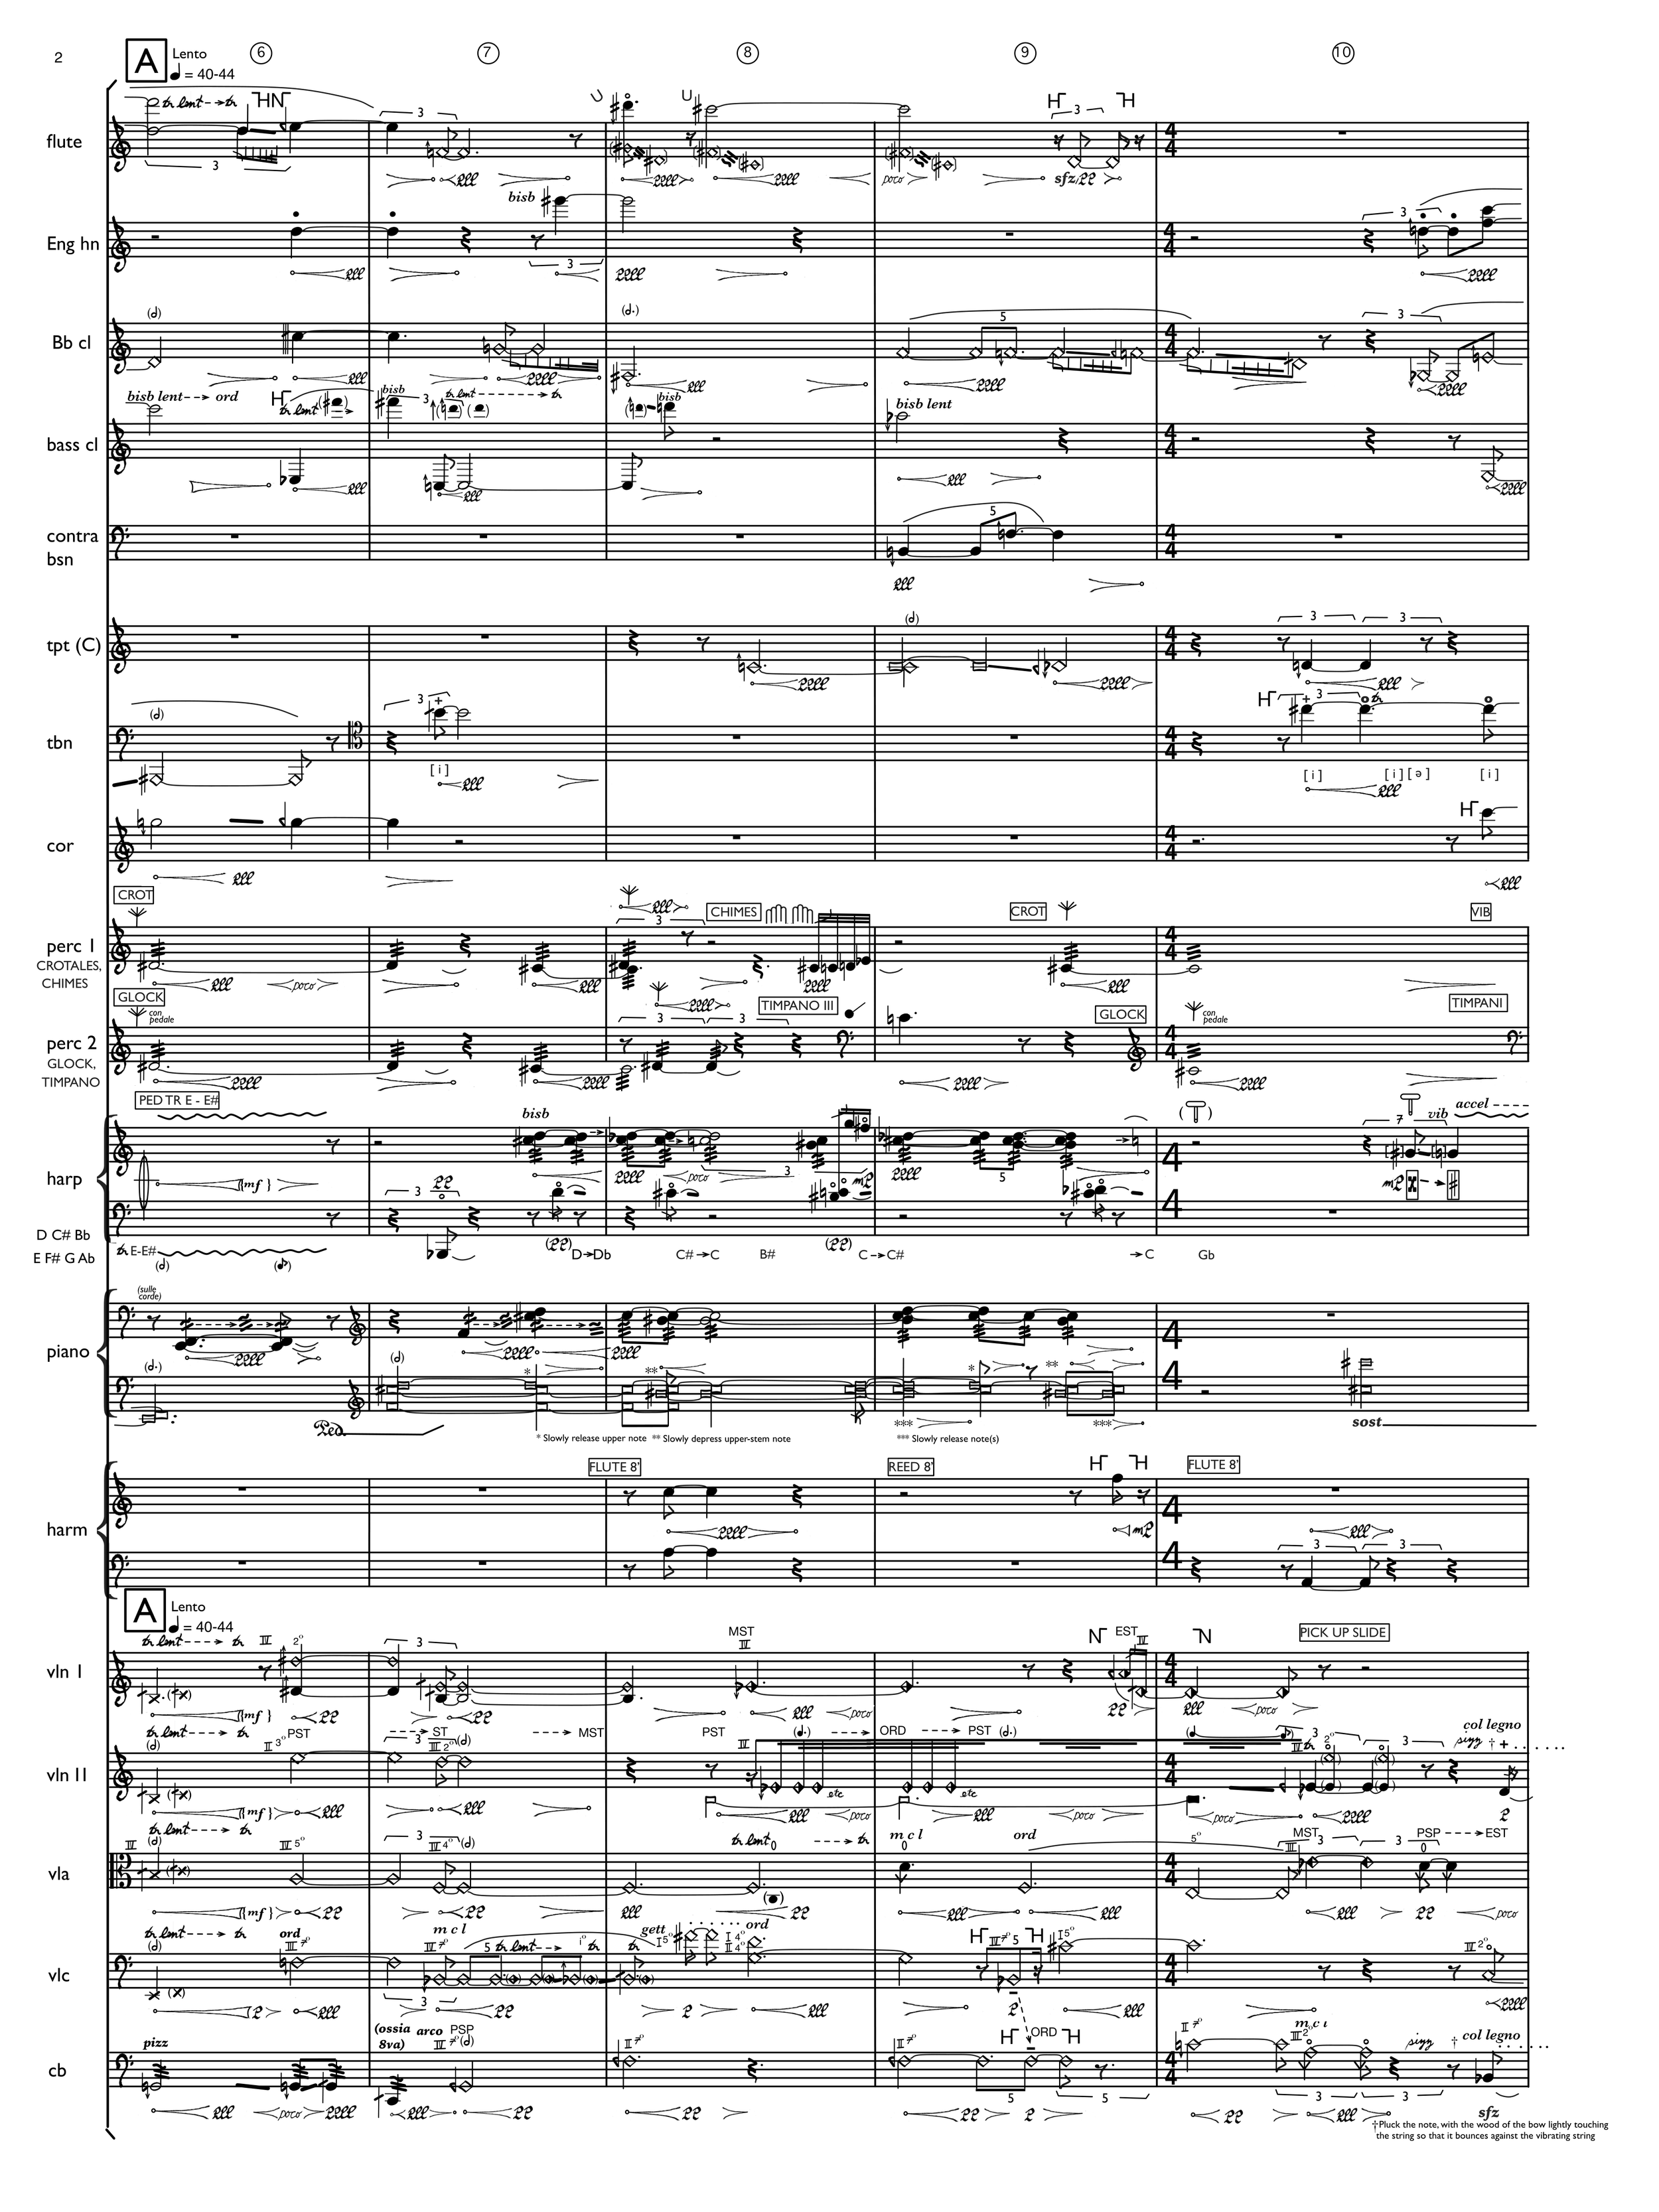 Alessandrini-Abhanden-00-score-notes-02.png